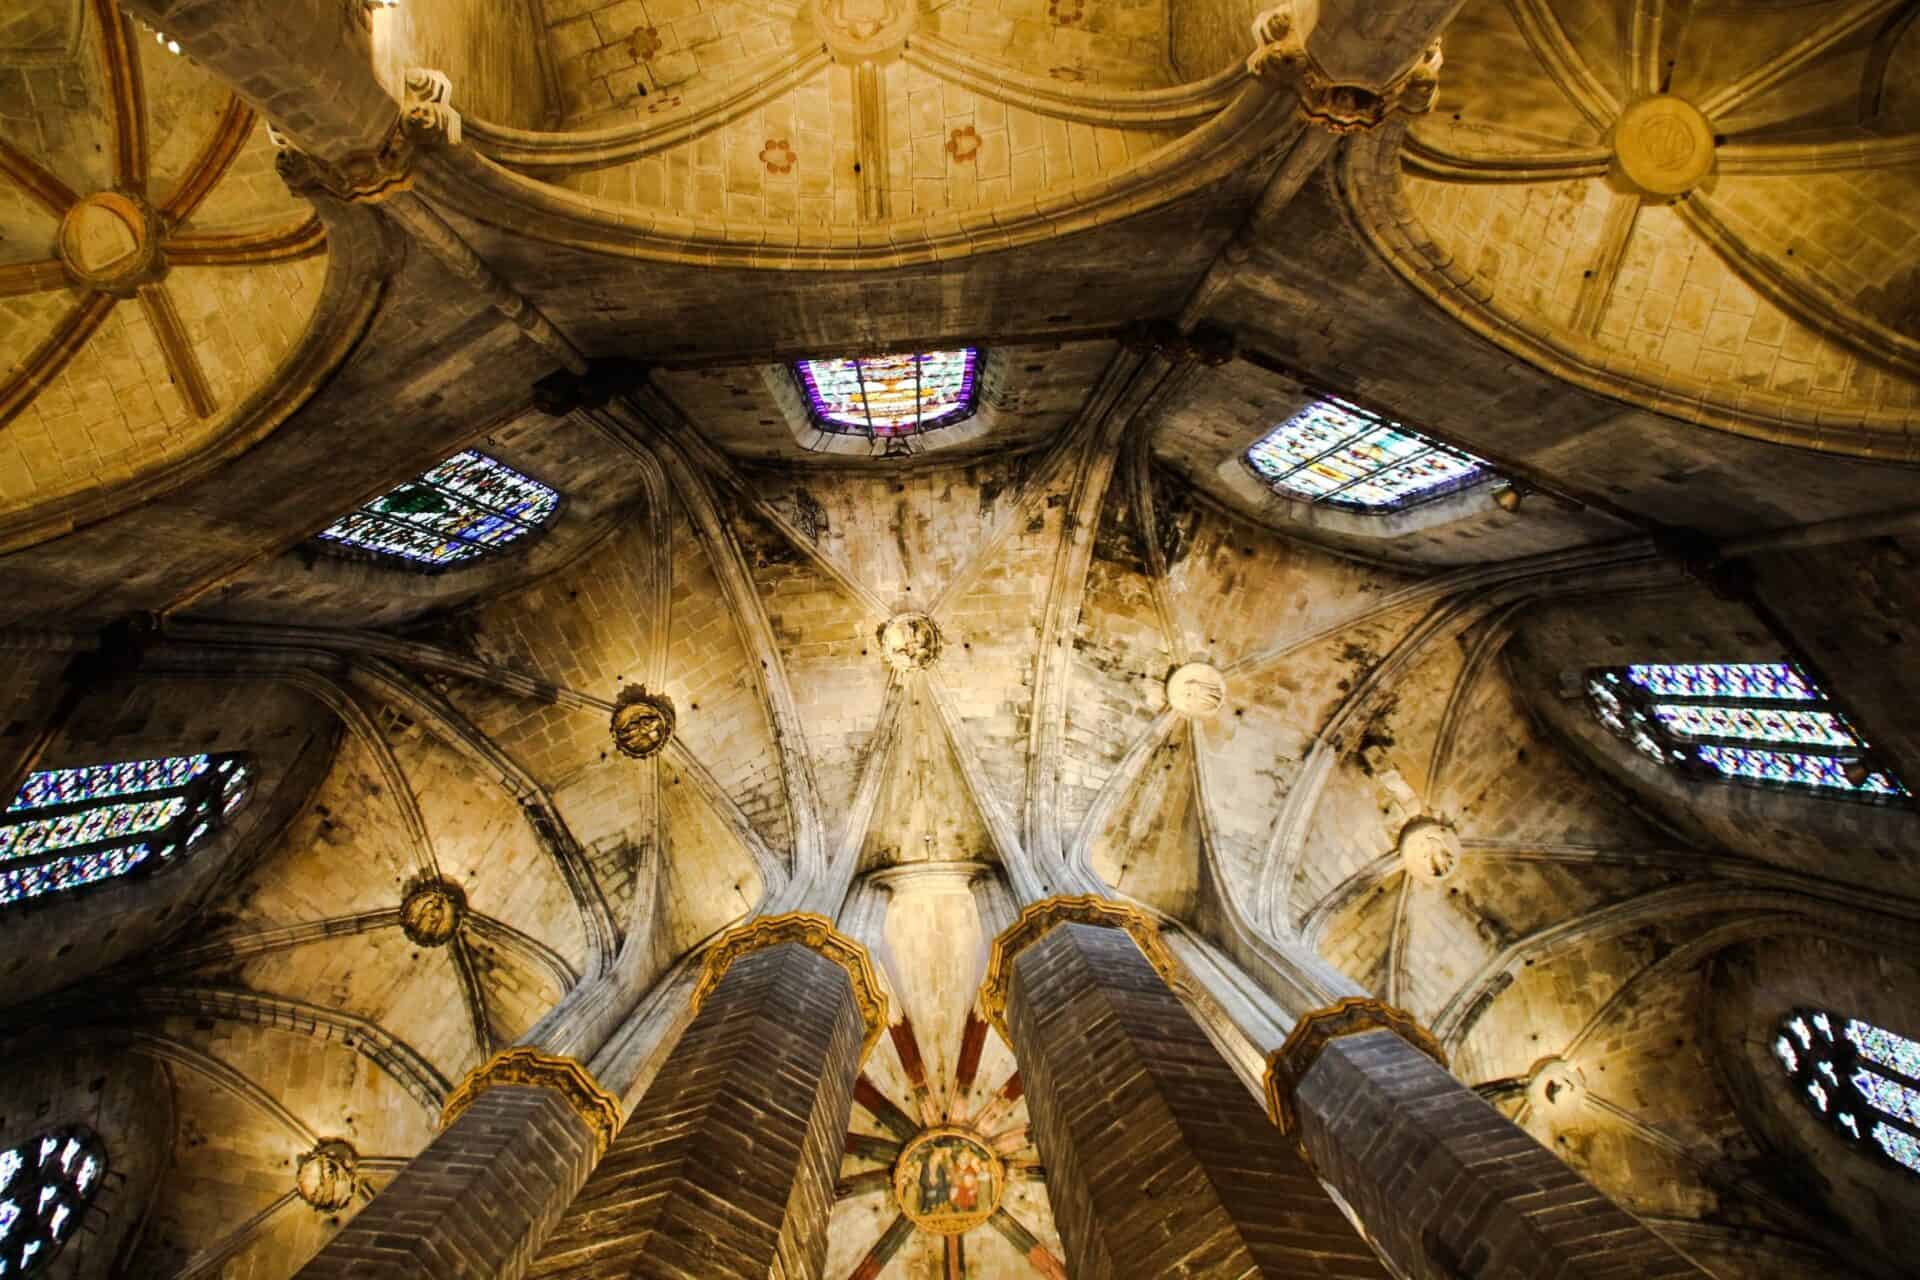 Interior ceiling of Santa Maria del Mar Basilica in Barcelona